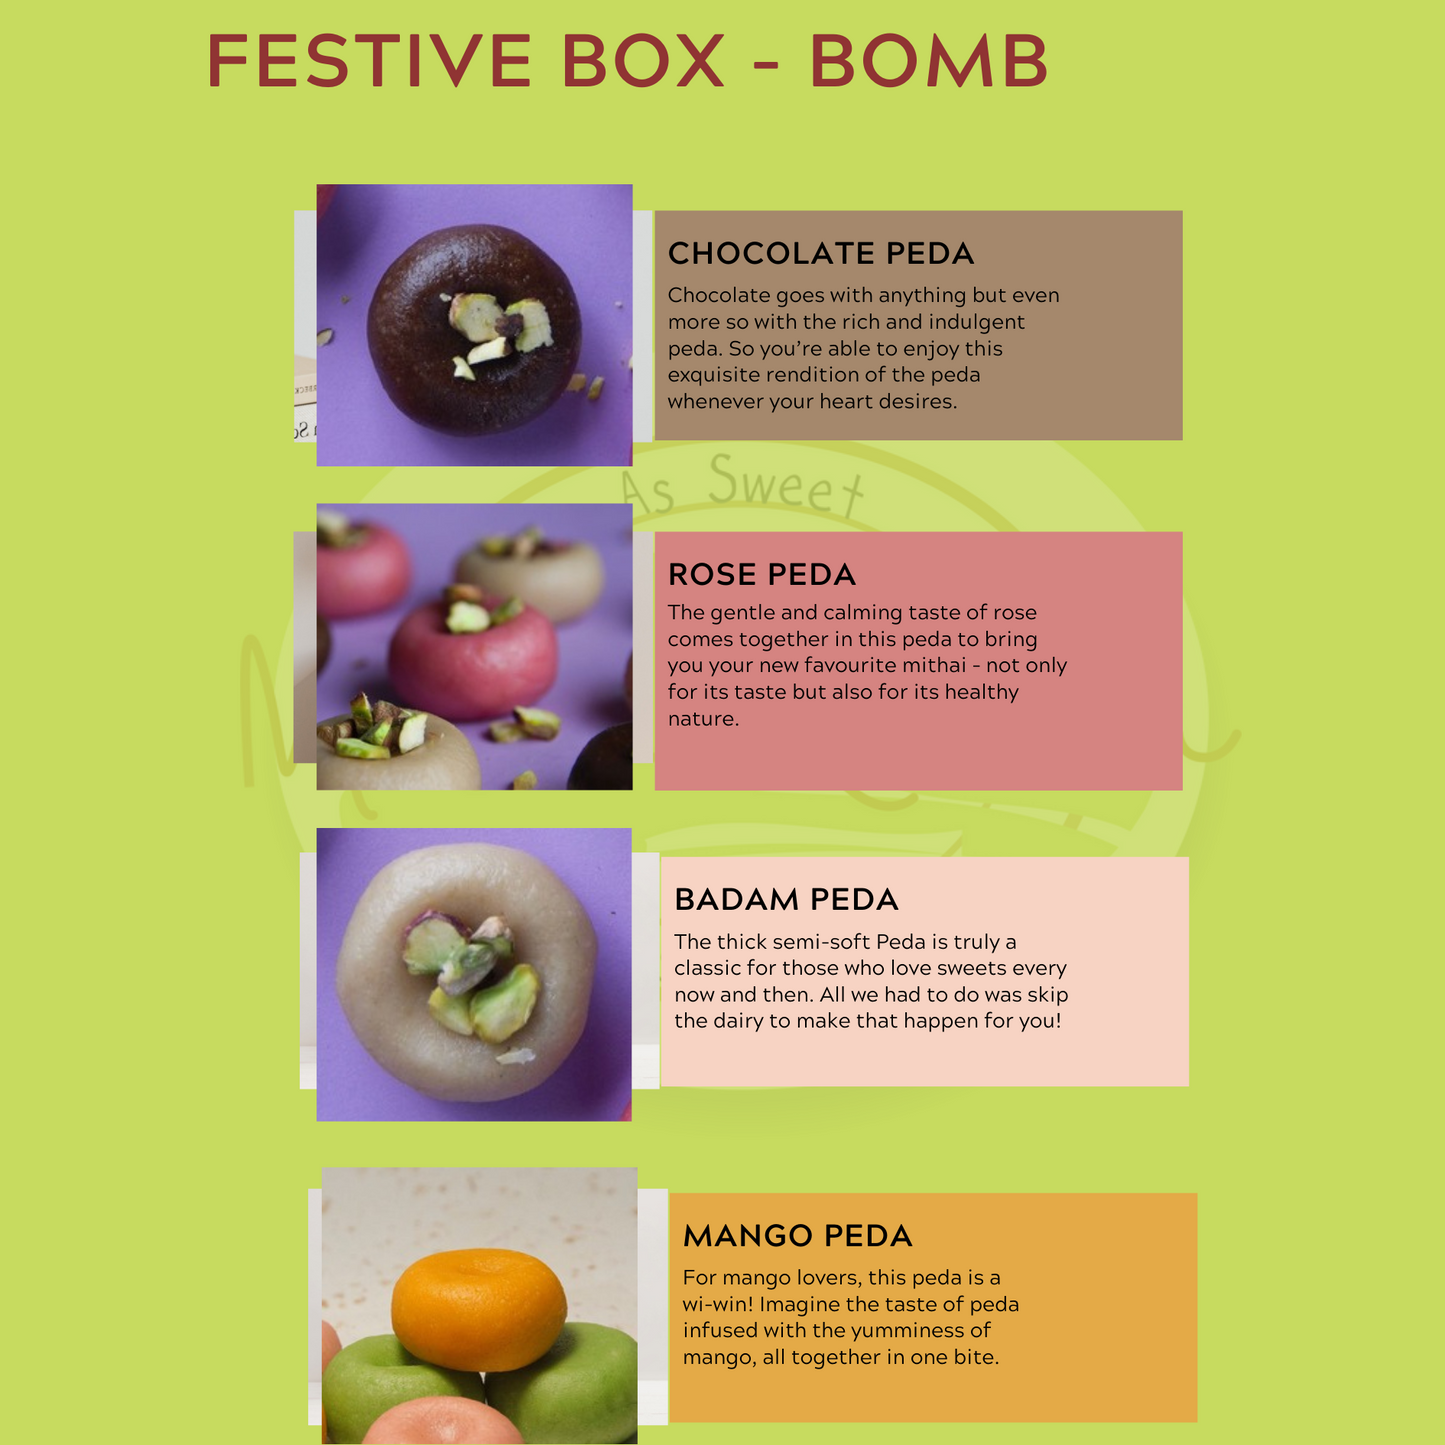 Festive Gift Box "Bomb"